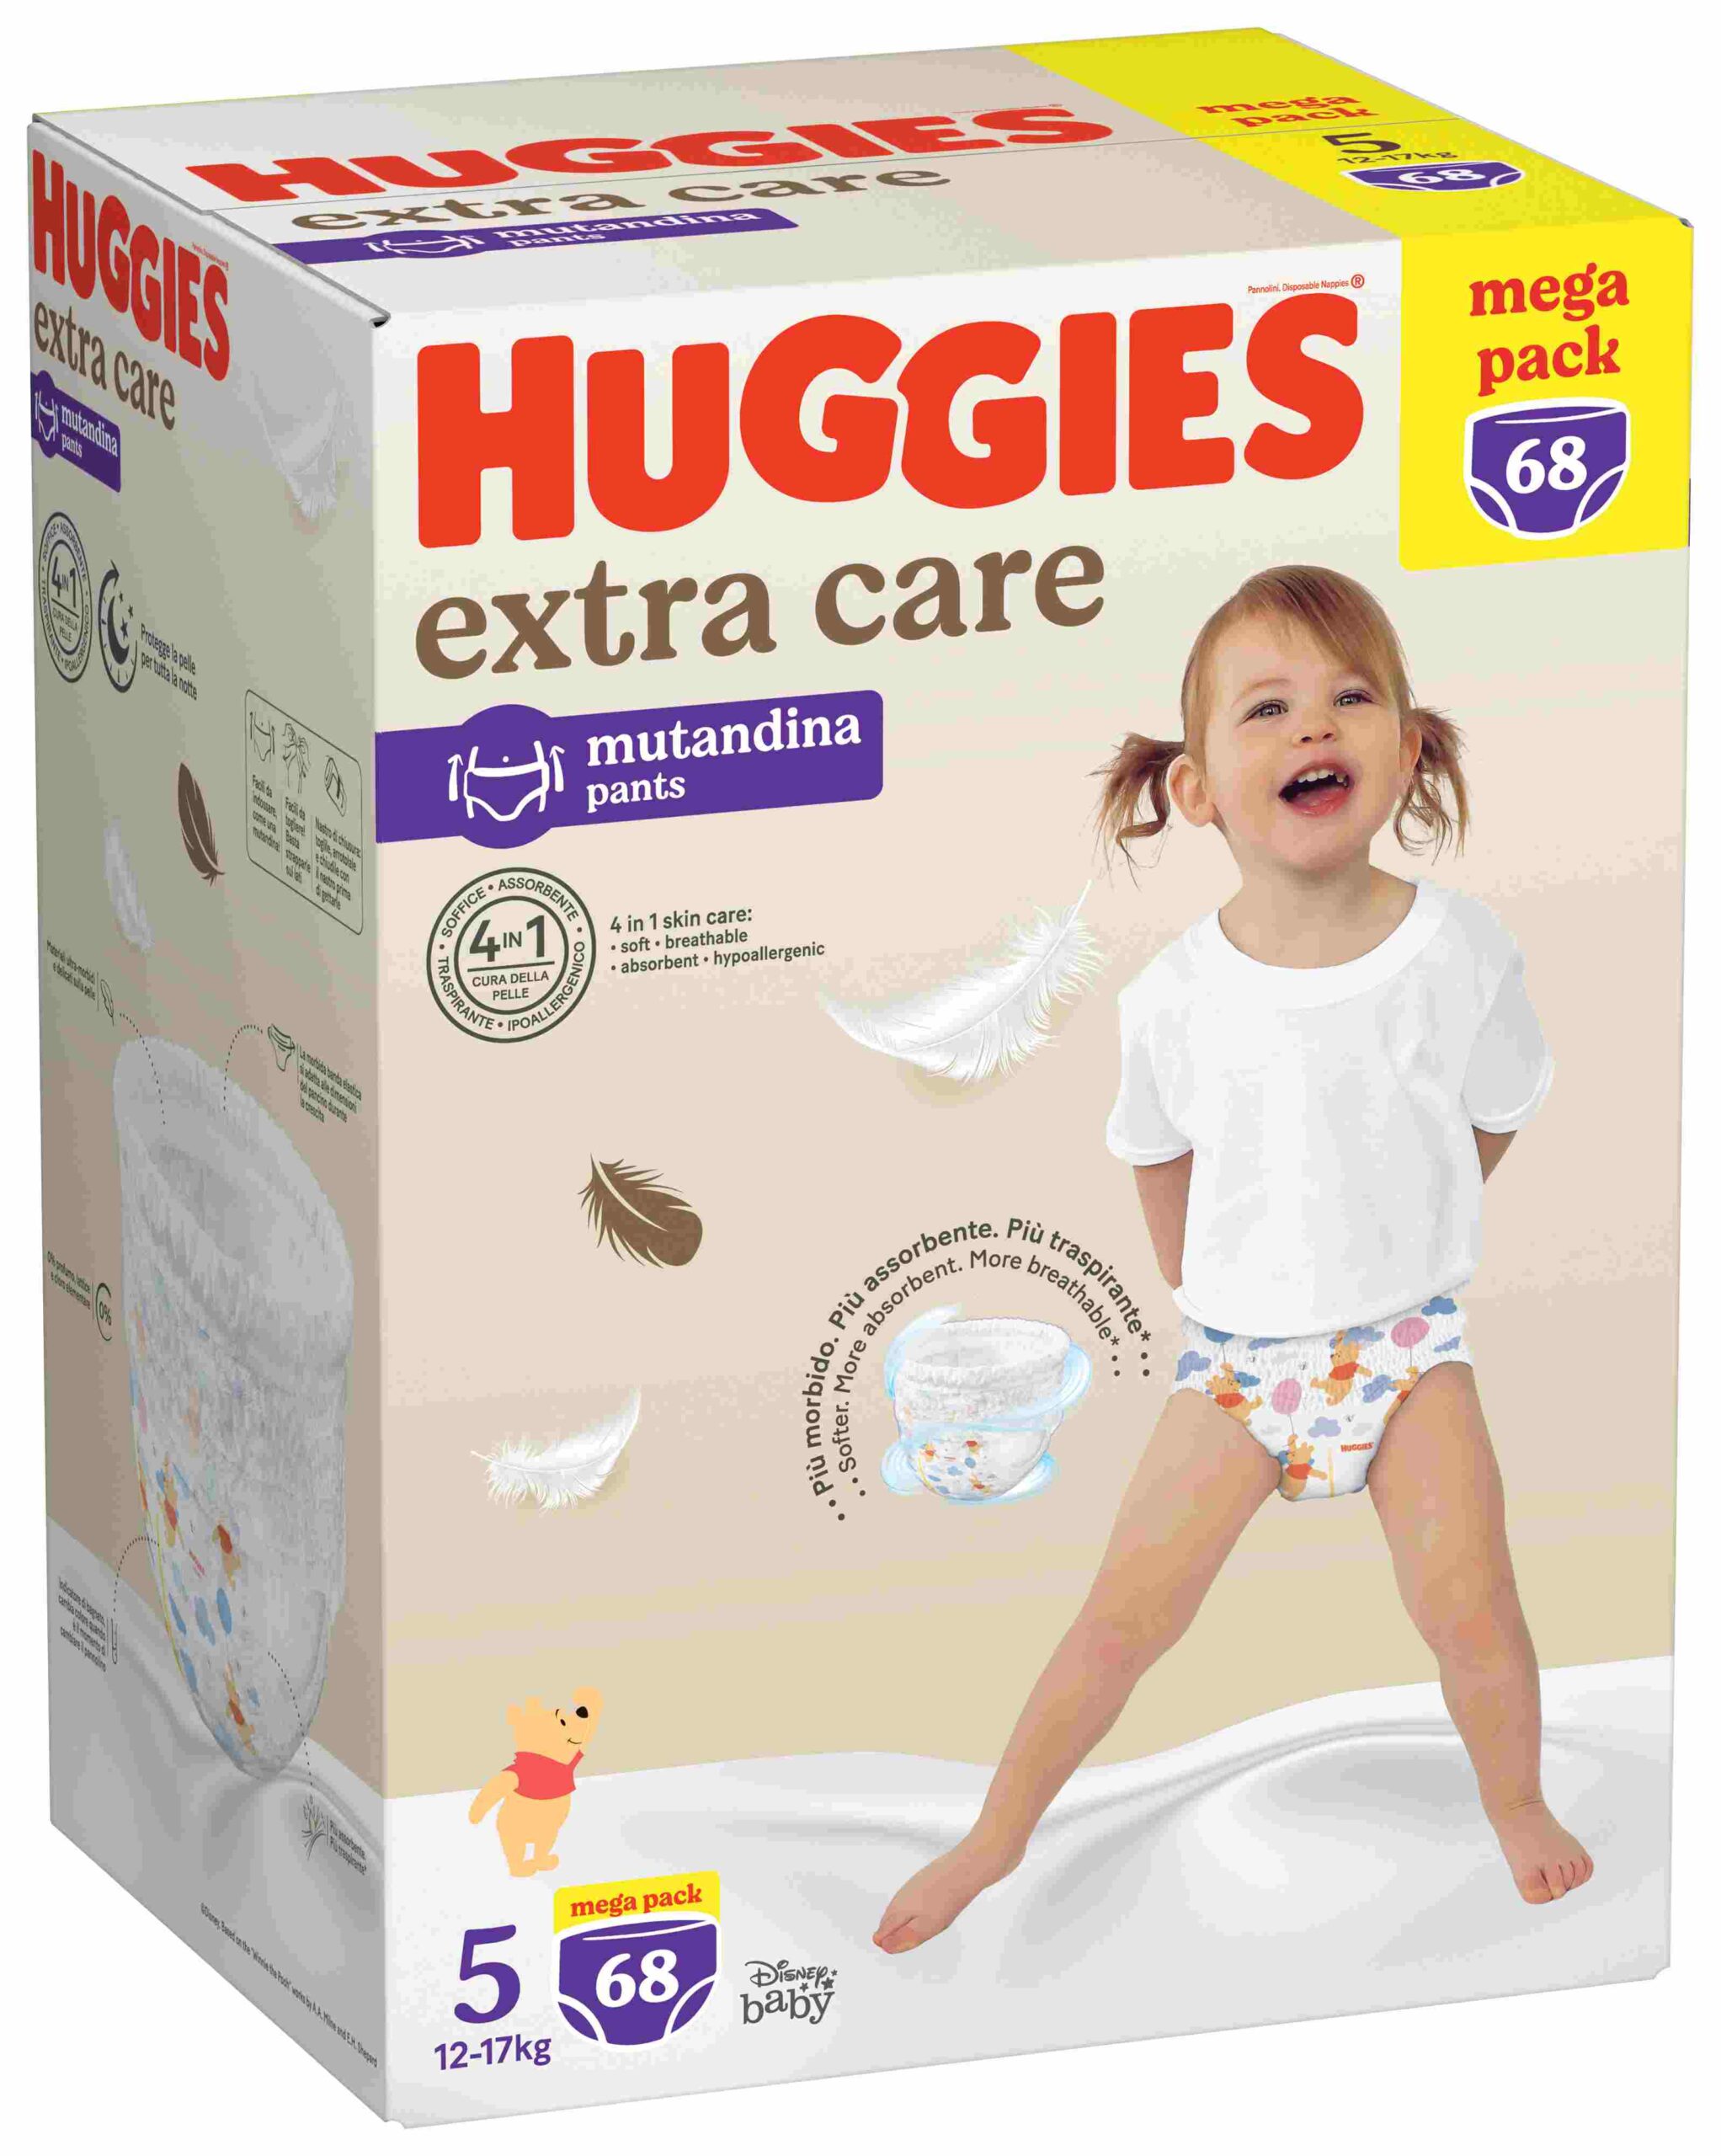 Huggies extra care mutandina unisex mega pack tg.5 68 pezzi - Huggies